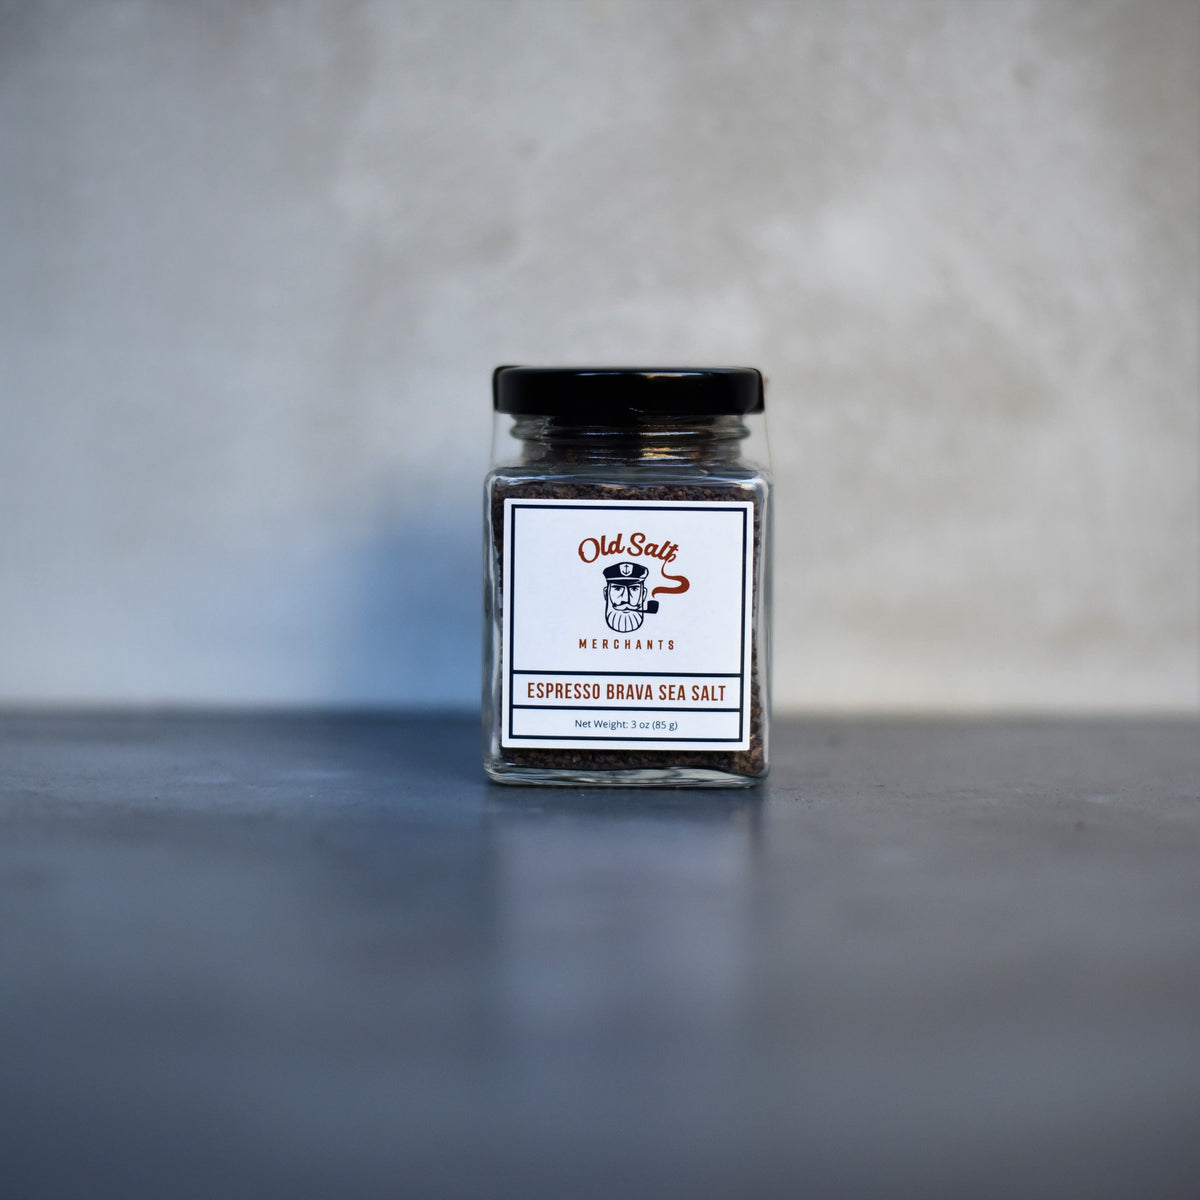 Espresso Brava Sea Salt exclusive at Tastermonial